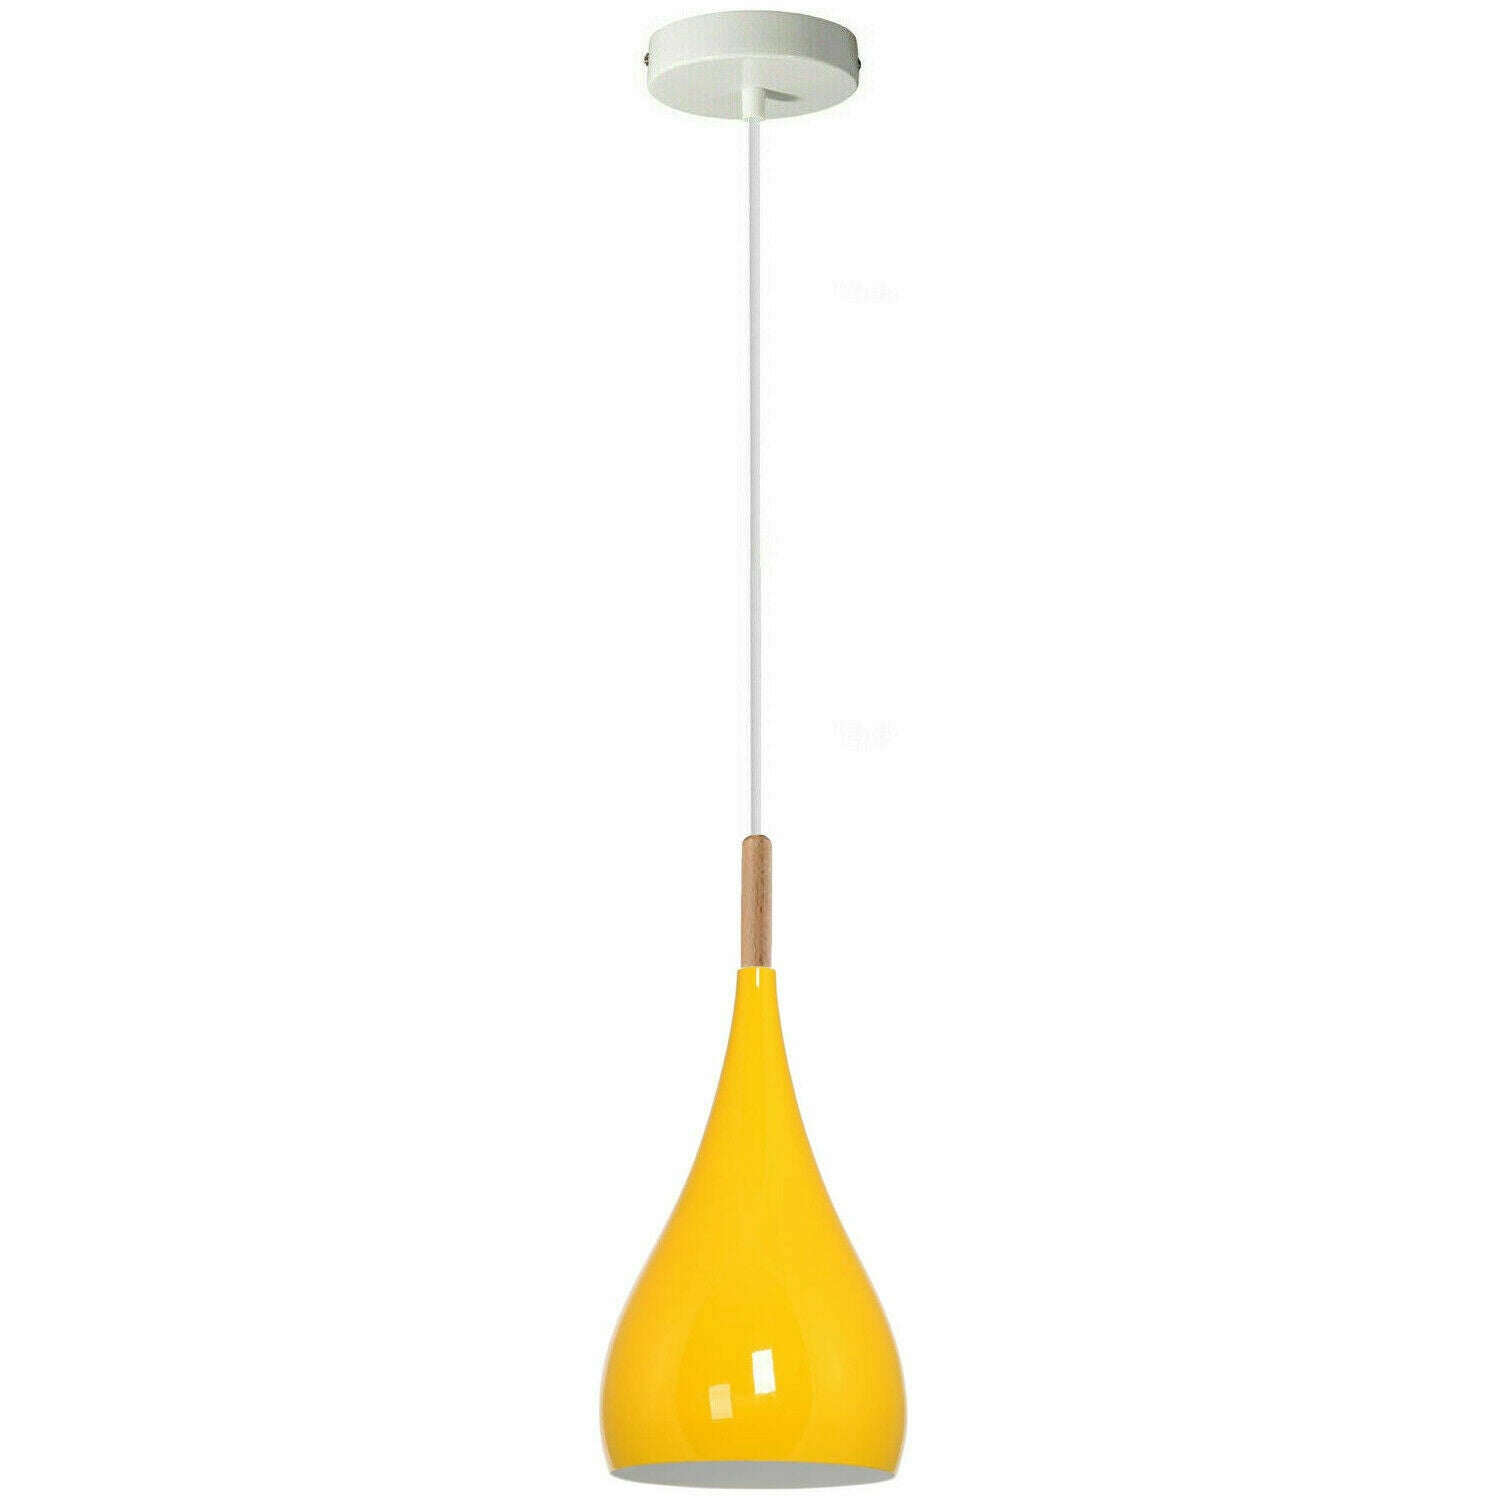 Yellow colour Retro Style Metal Ceiling Hanging Pendant Light Shade Modern Design~1647 - LEDSone UK Ltd